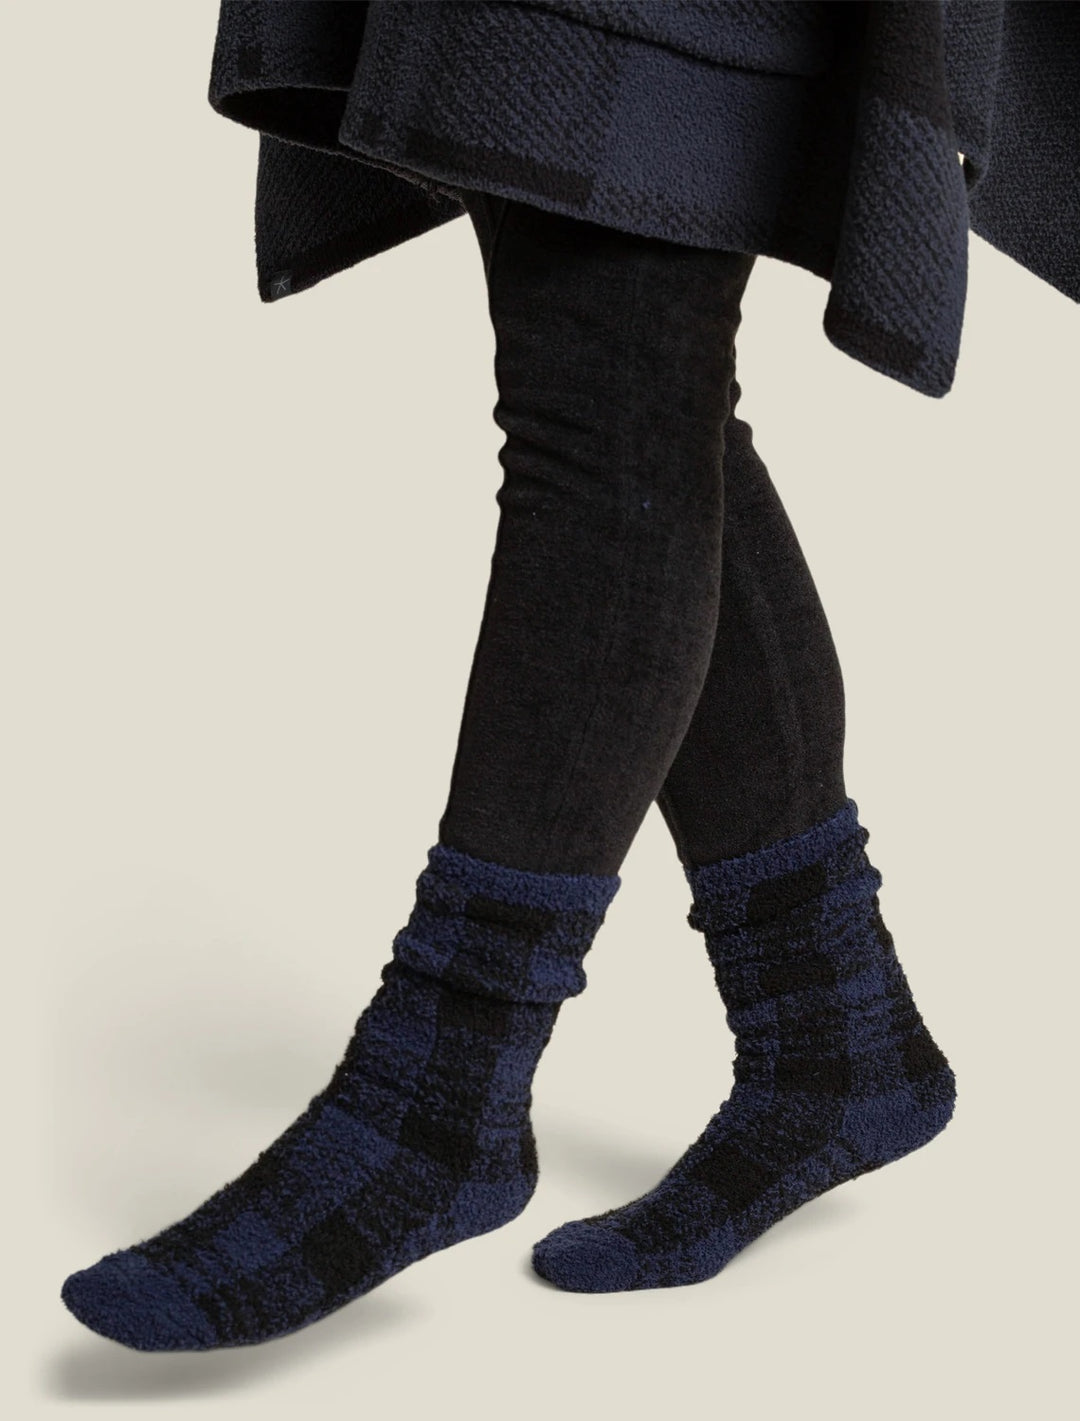 Barefoot Dreams - Cozychic Women's Plaid Sock in Indigo-Black